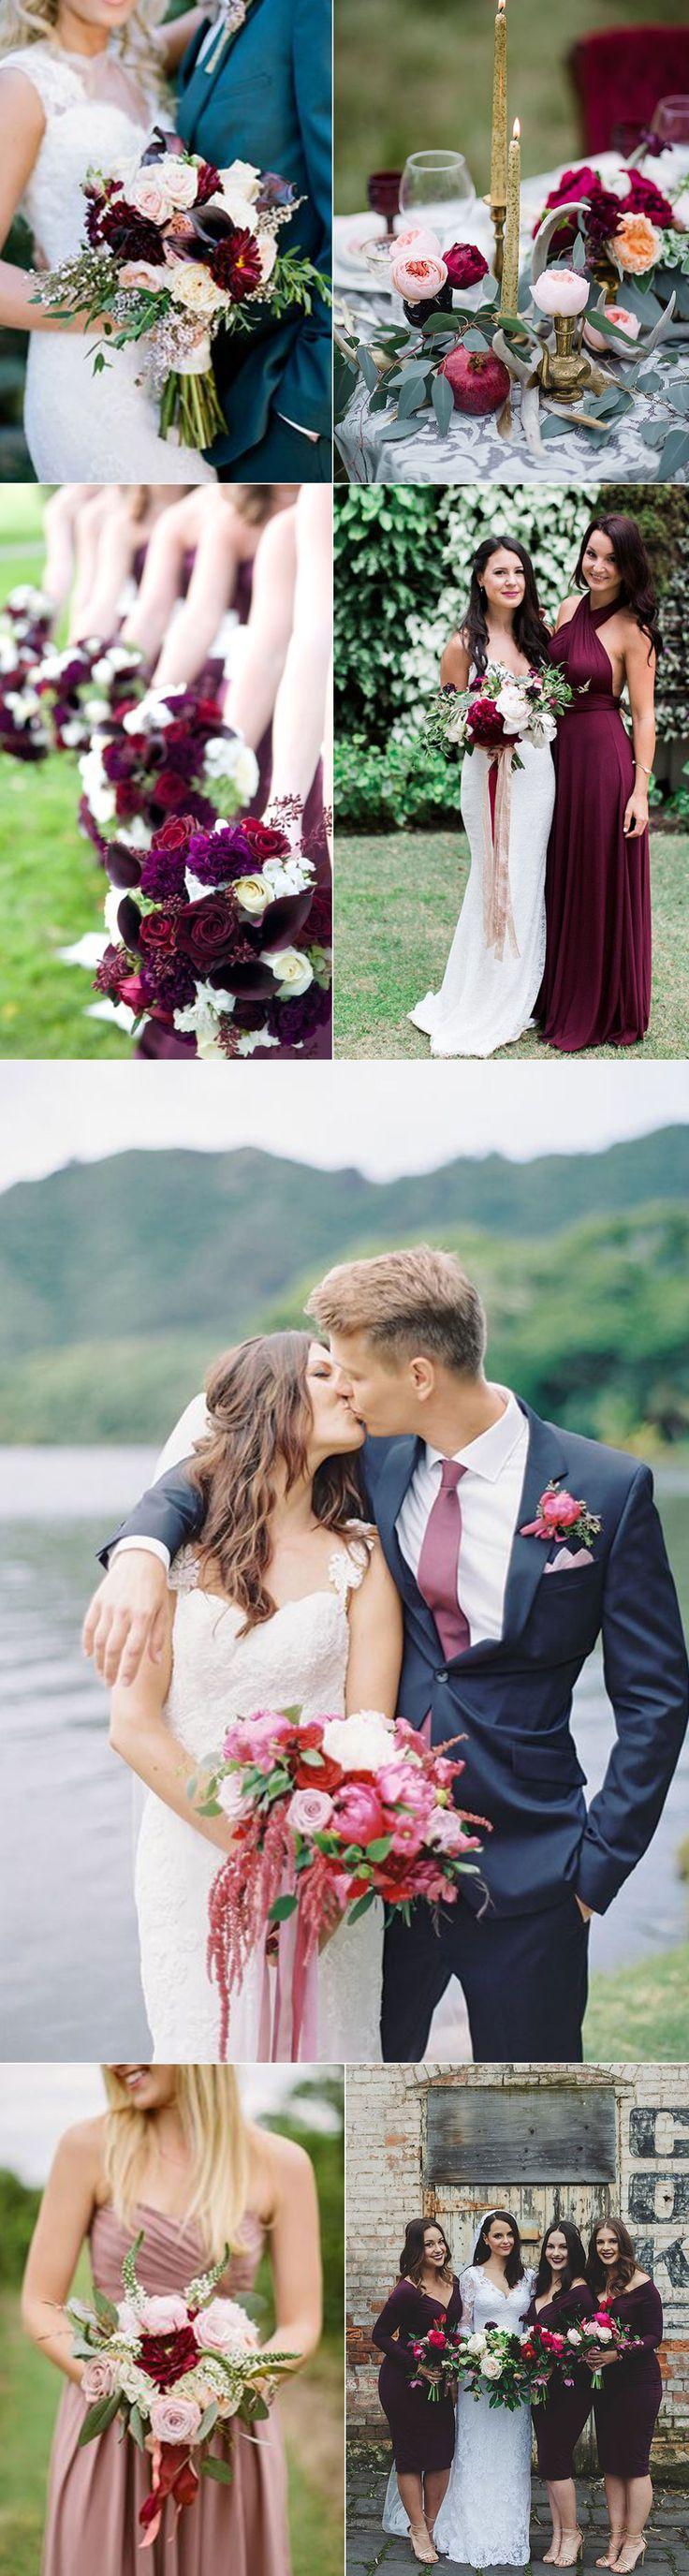 زفاف - Wedding Inspiration For Plums And Pinks   